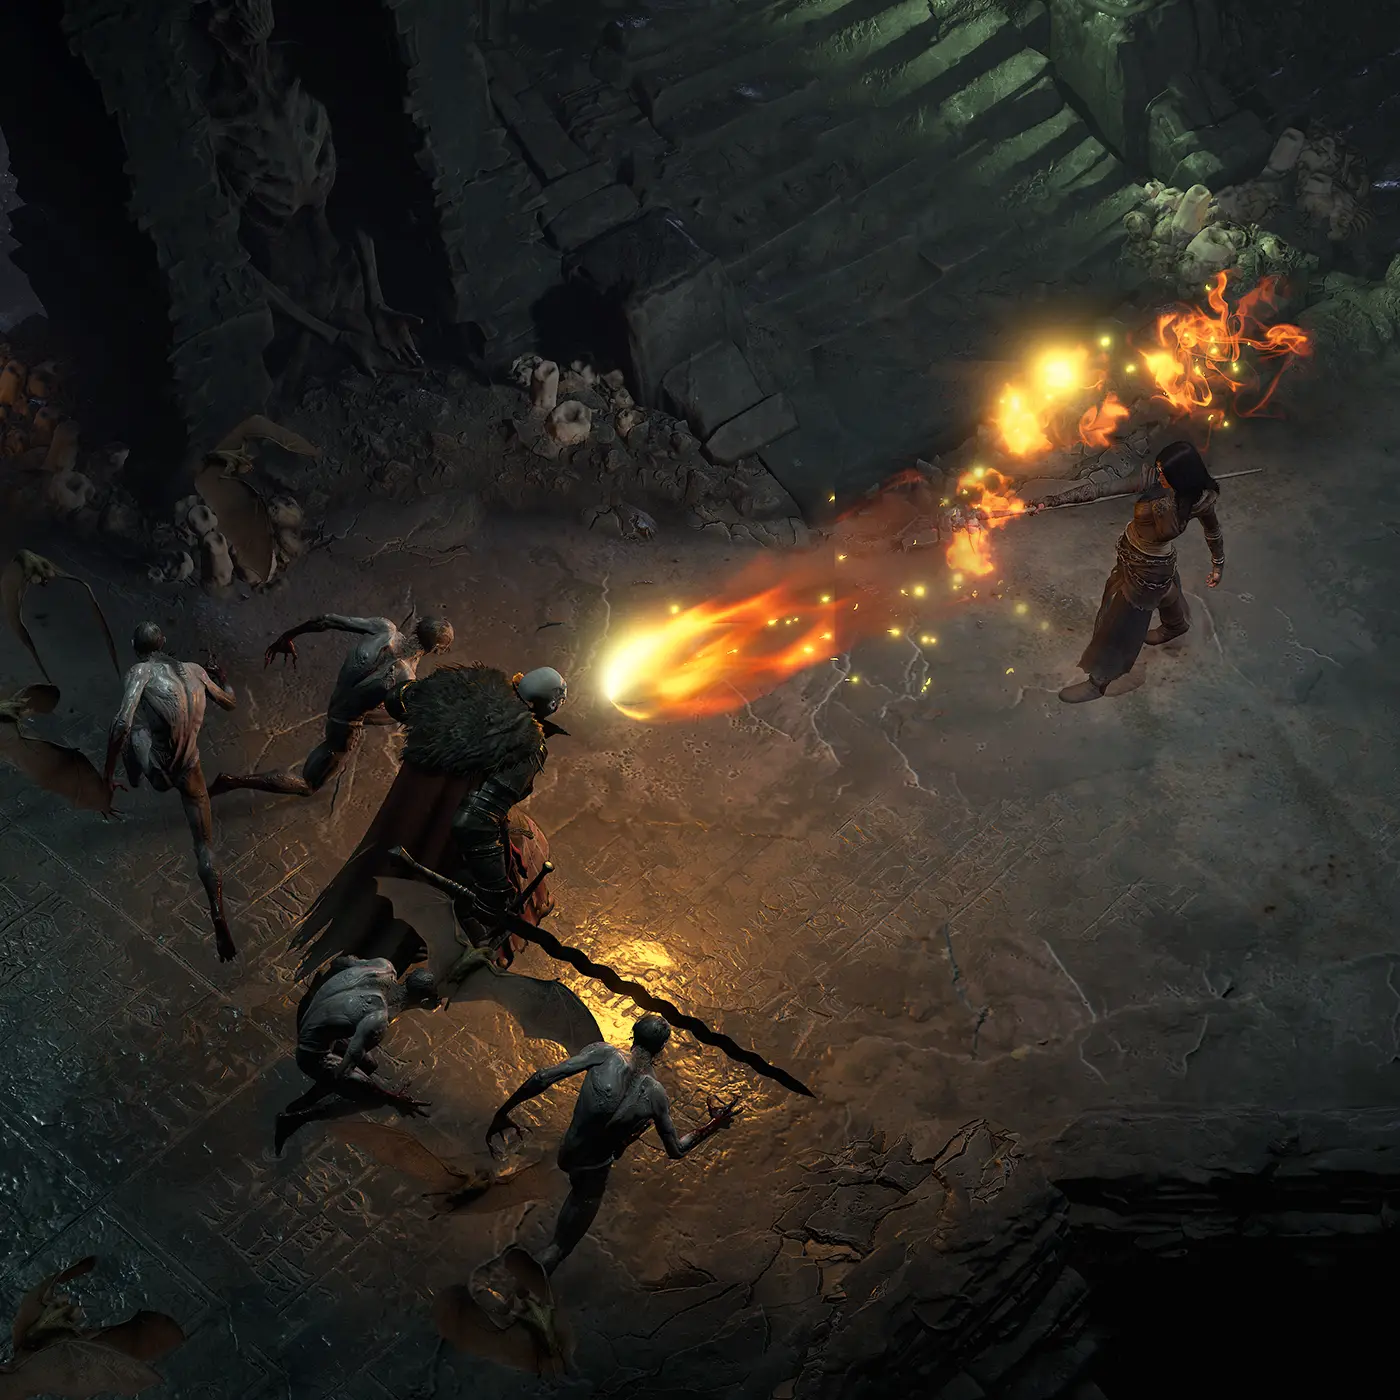 Sorcerer casting a lightning spell in Diablo 4